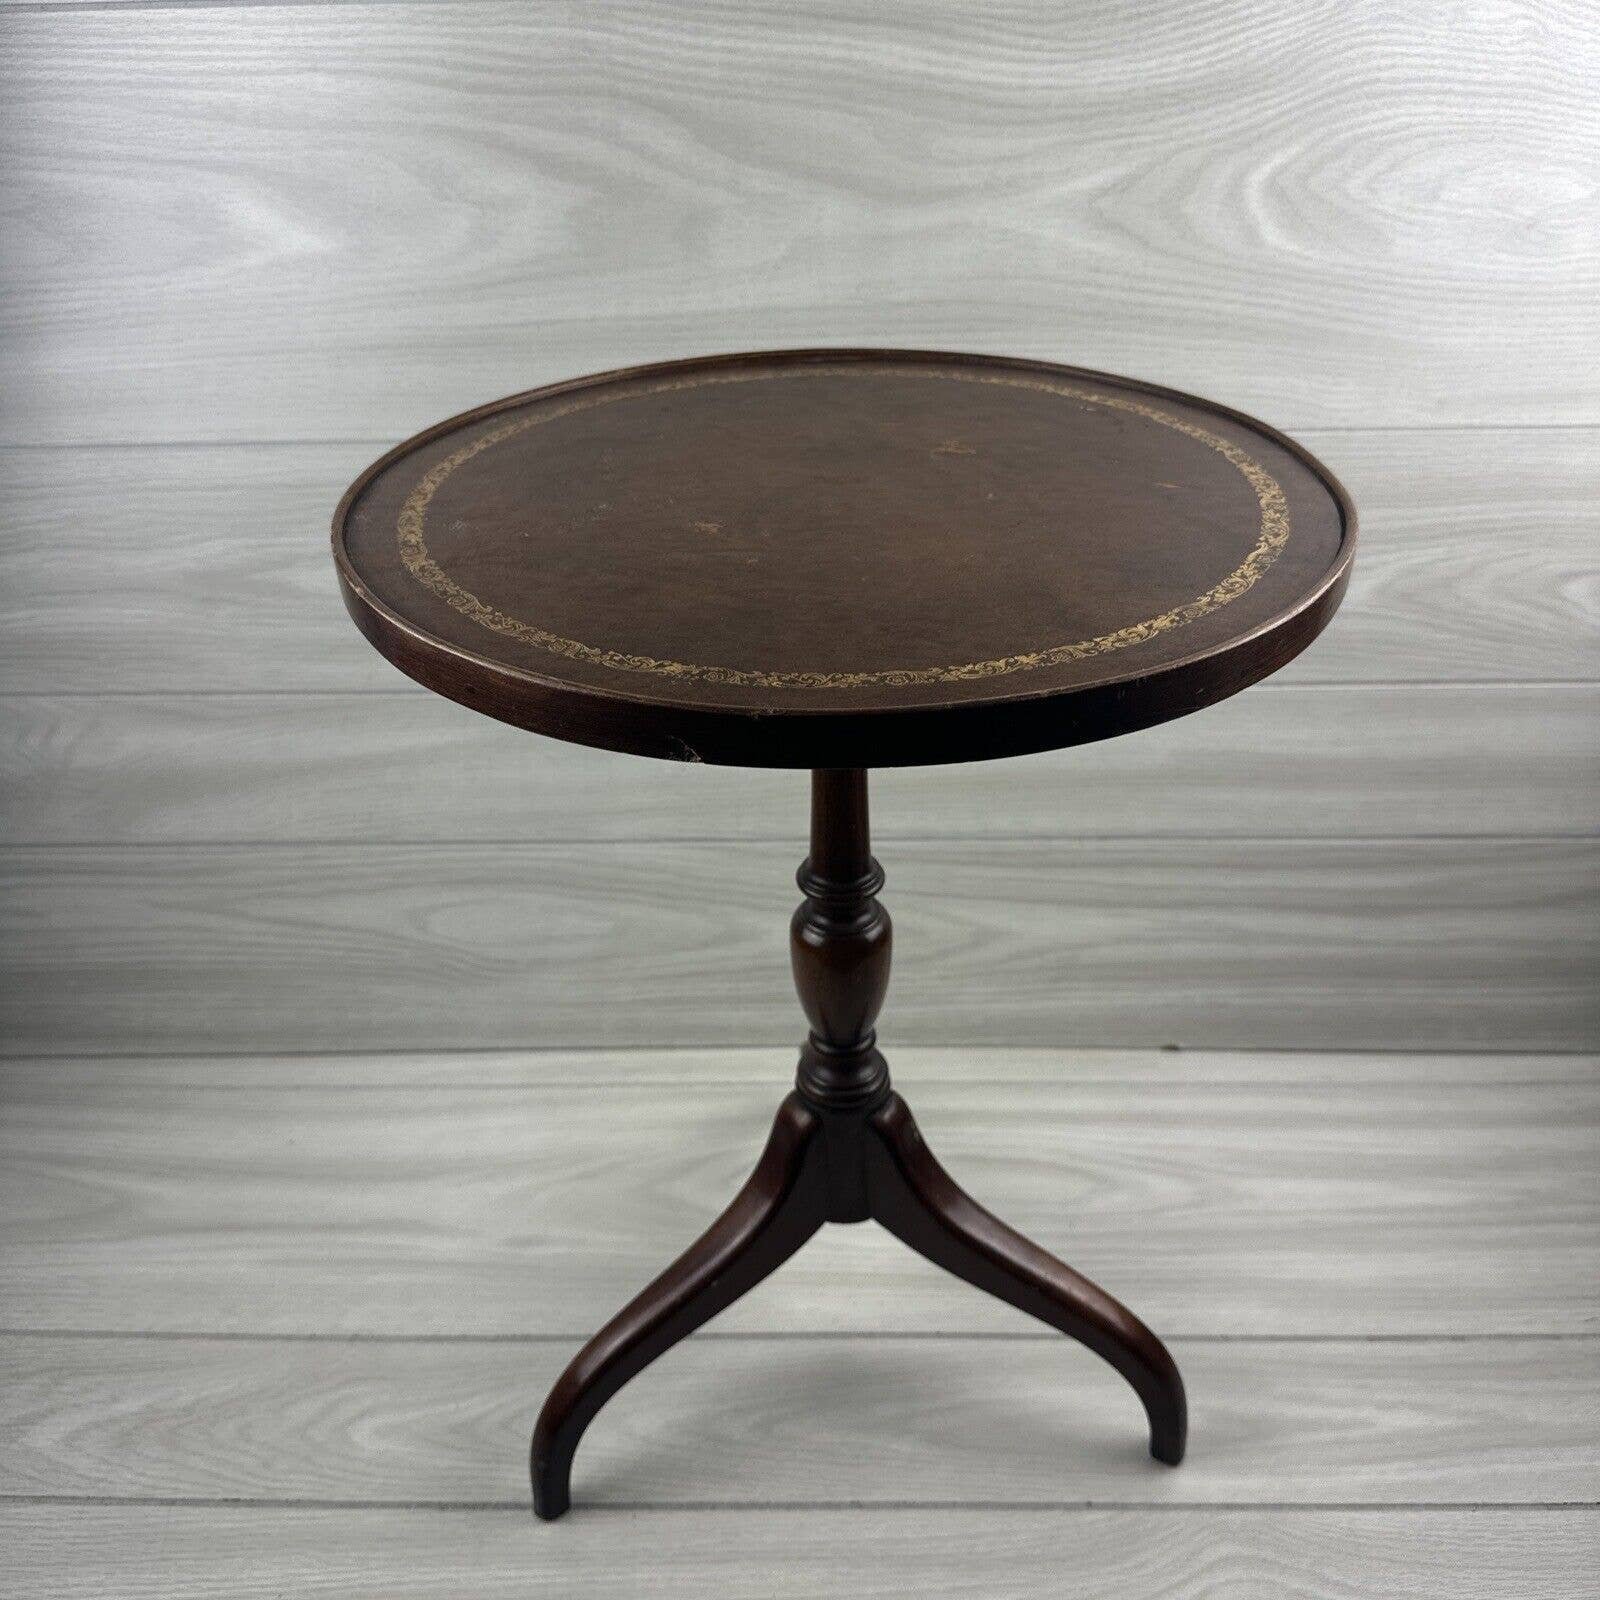 Vintage Georgian emboss leather top round mid century table. 19